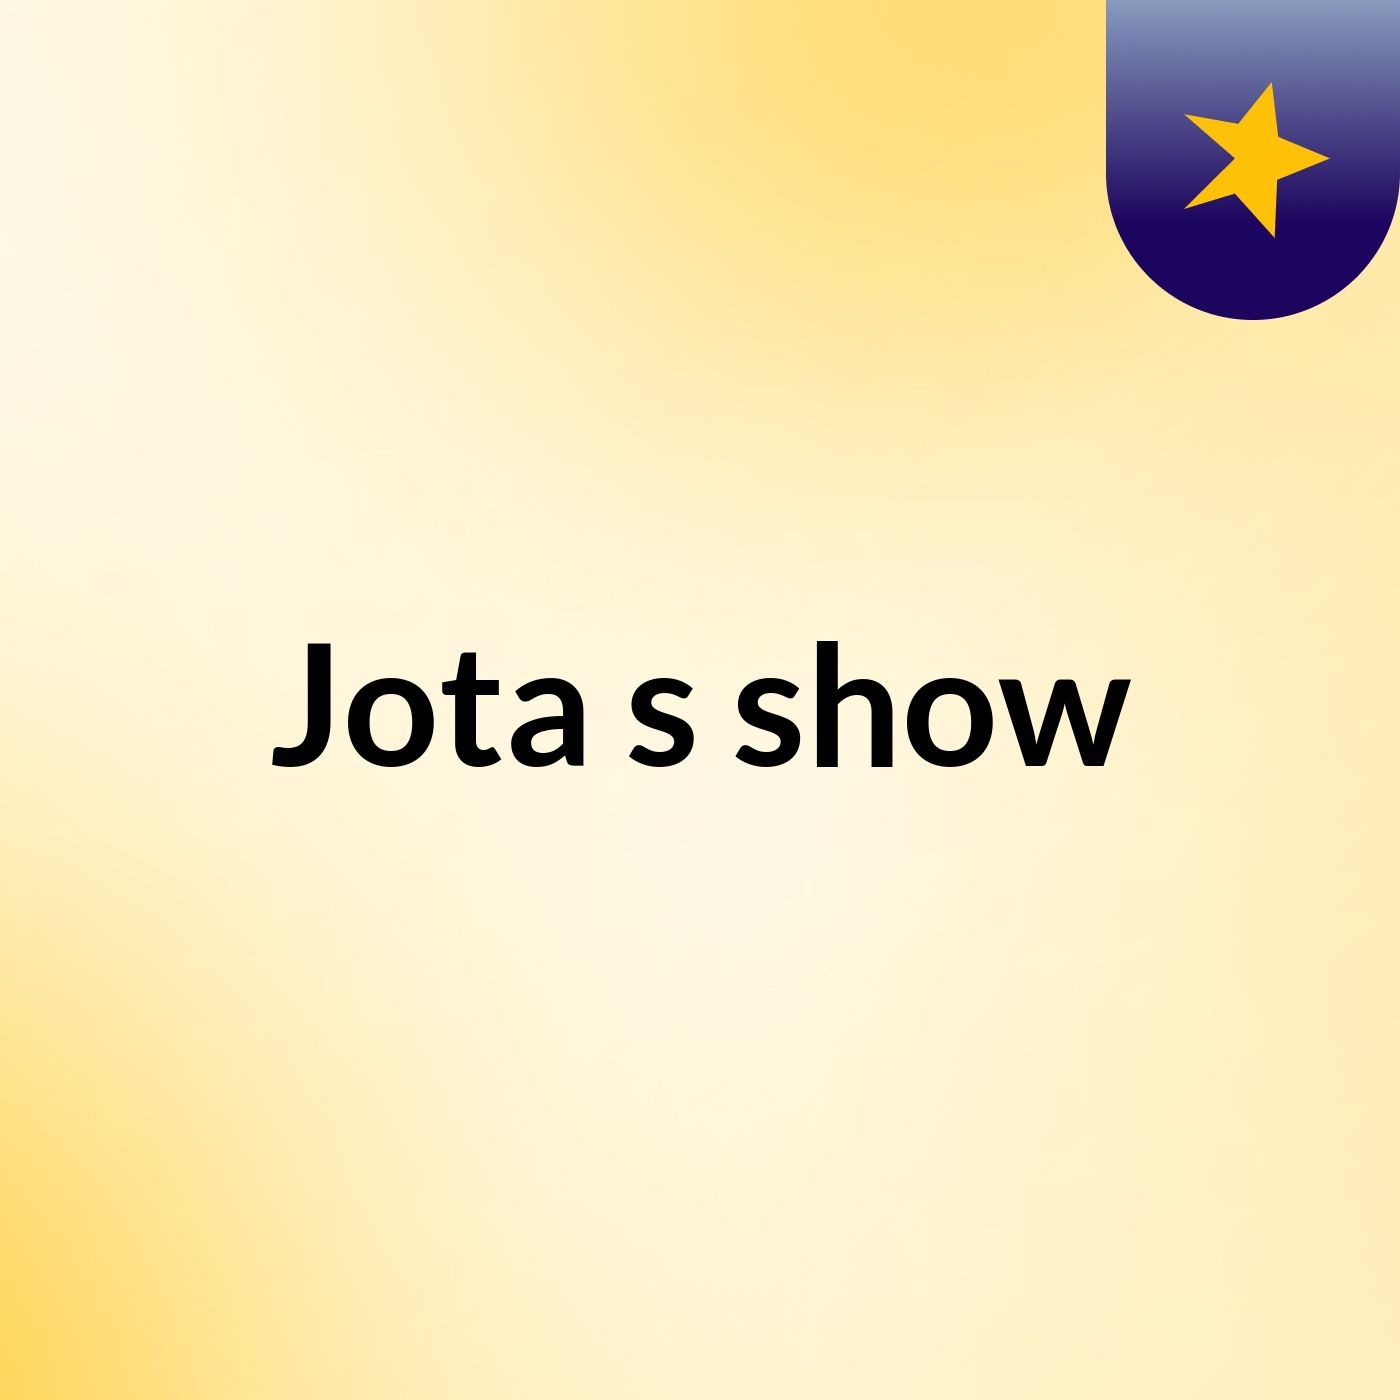 Jota's show